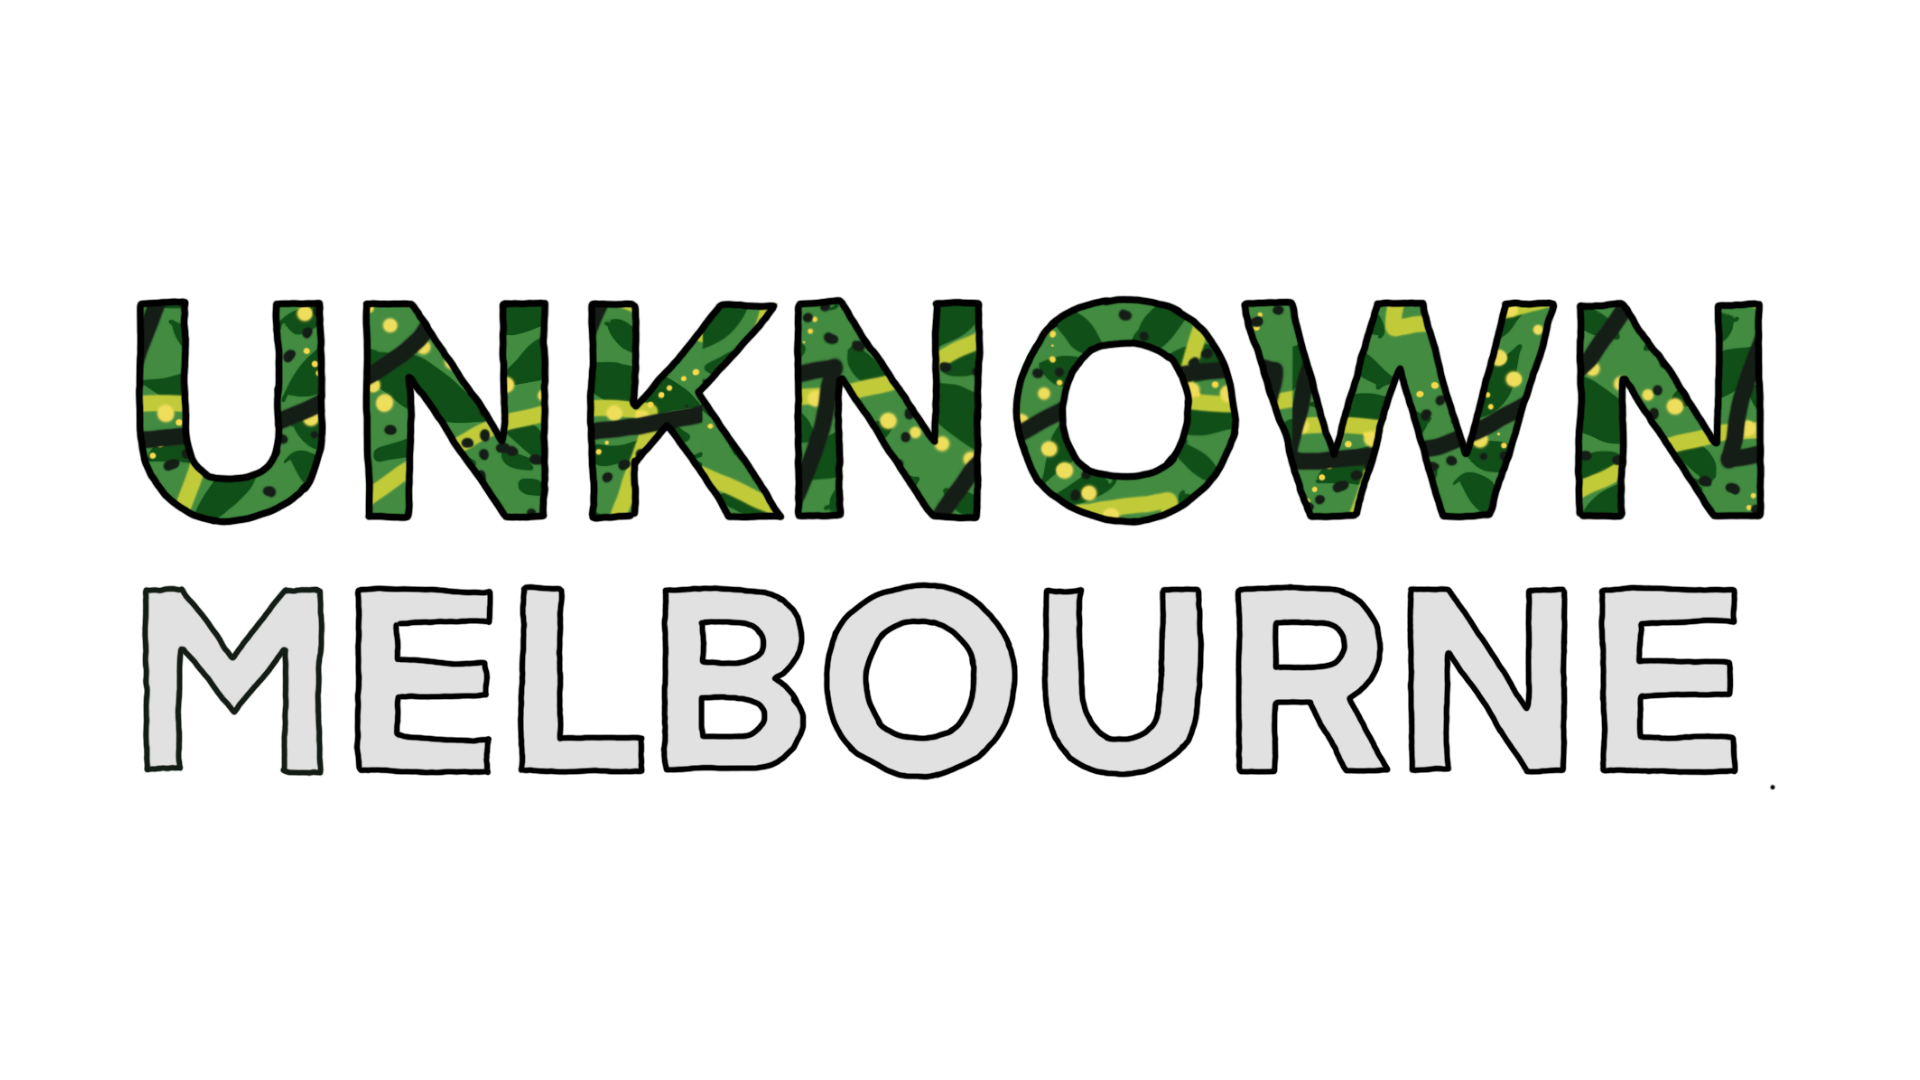 Unknown Melbourne